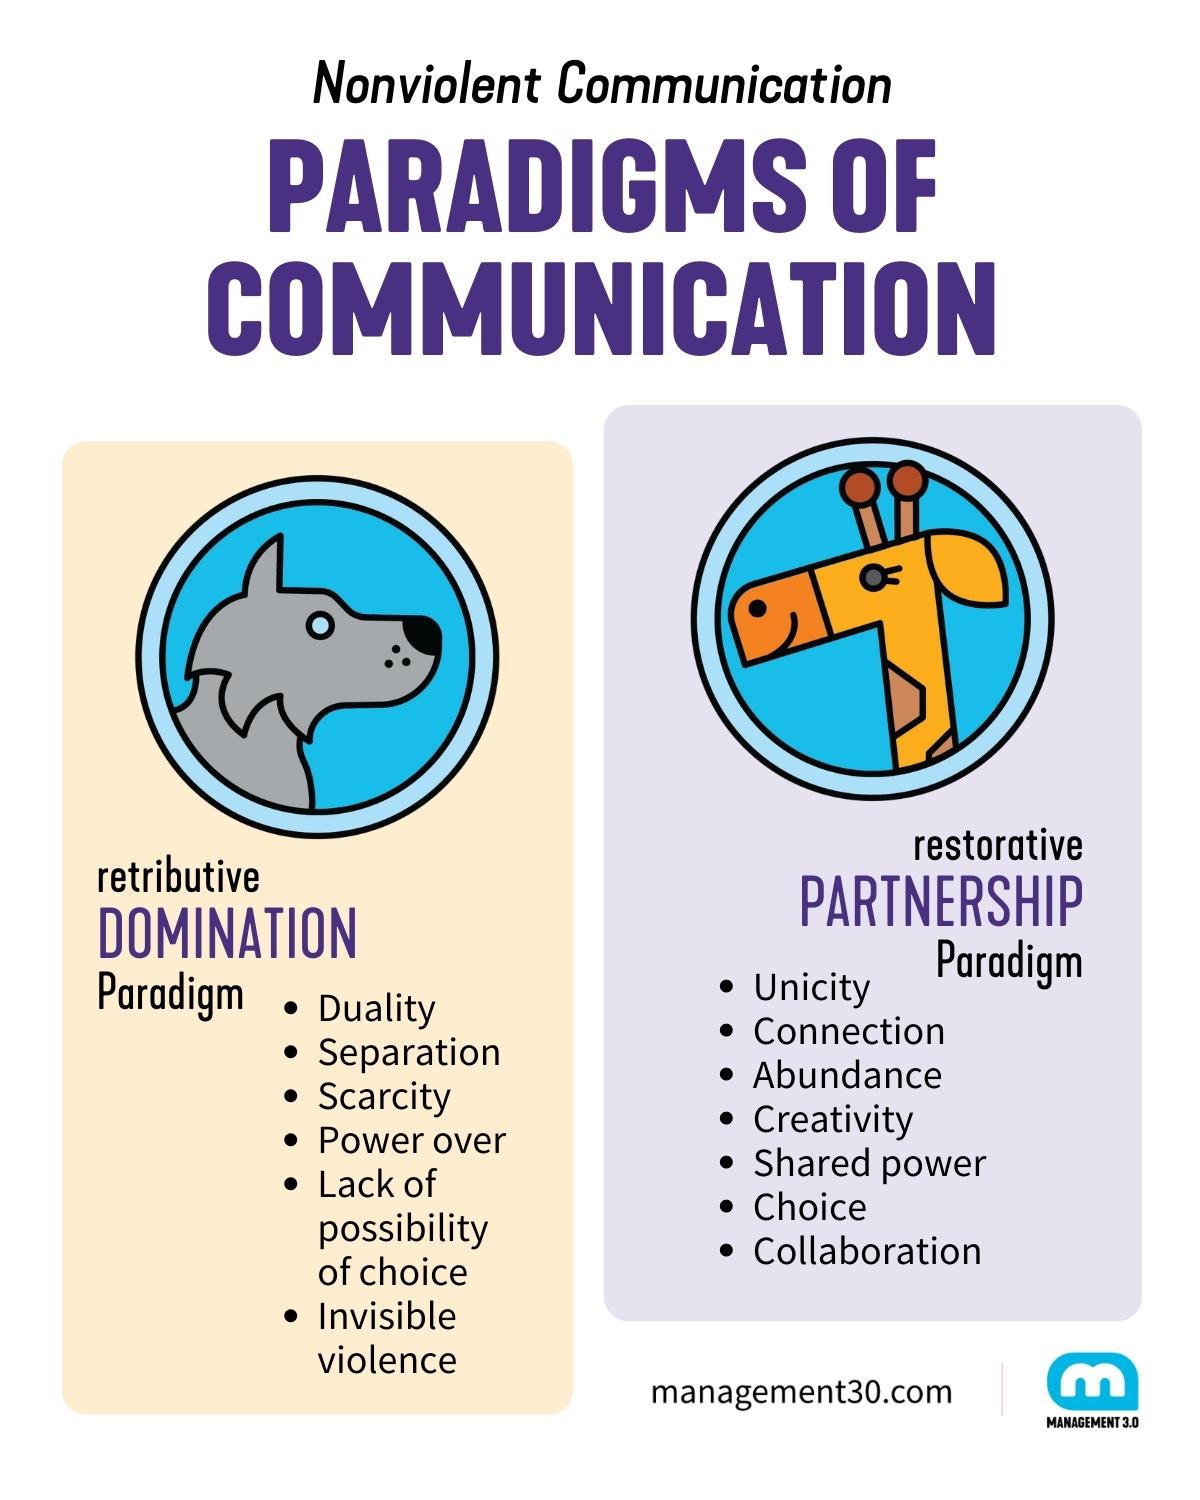 Paradigms of Communication according to Nonviolent Communication